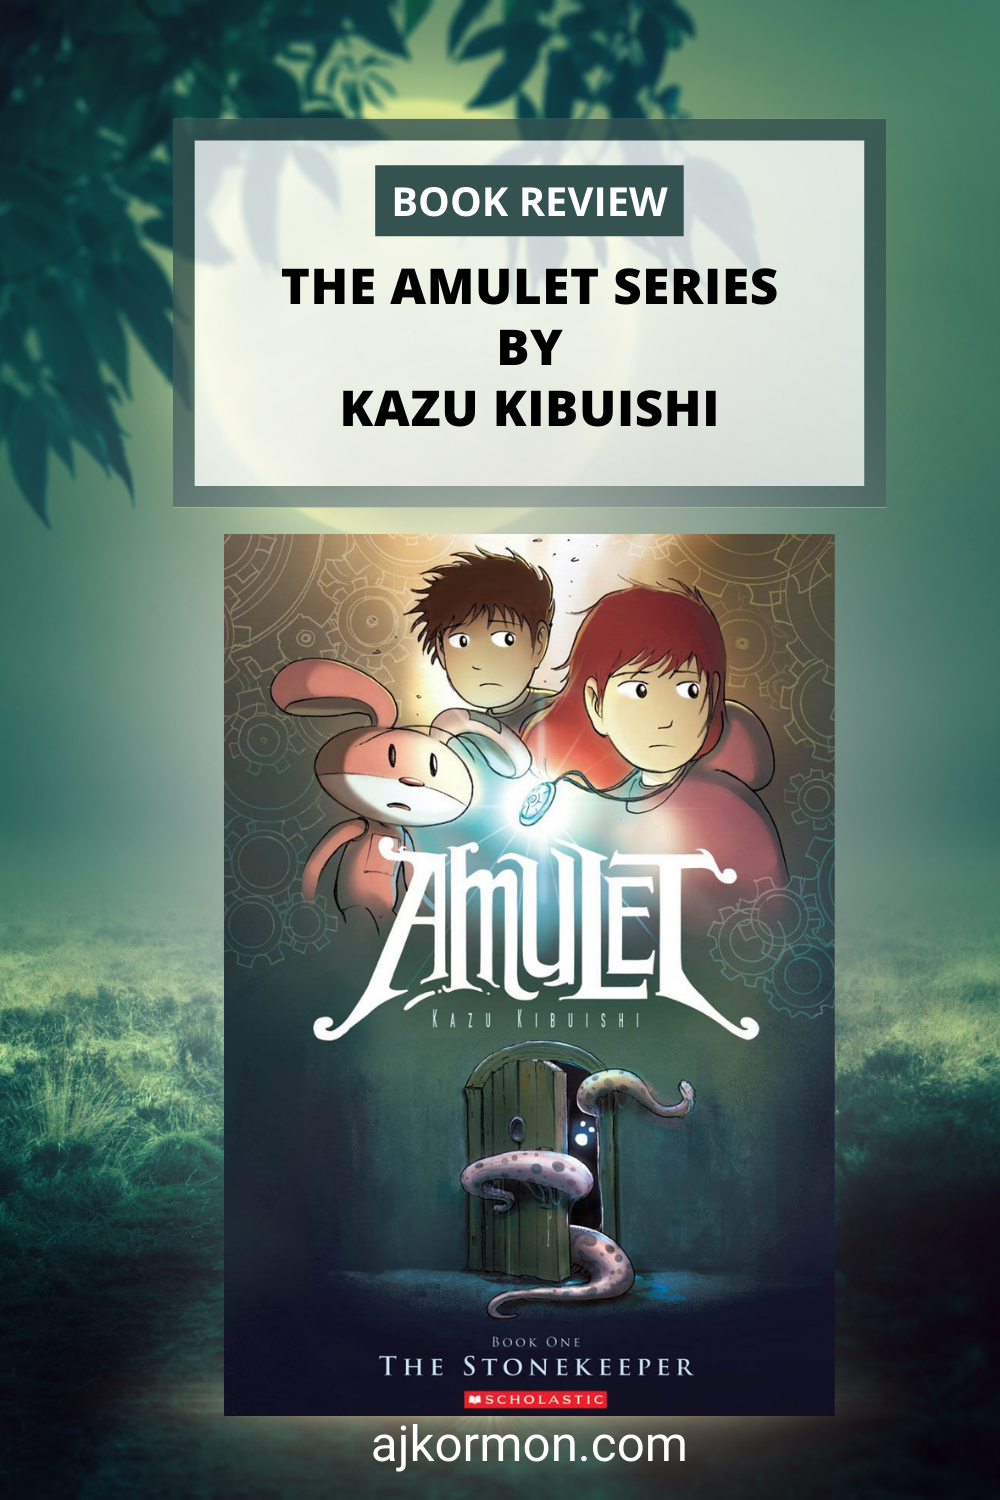 The Amulet Series by Kazu Kibuishi